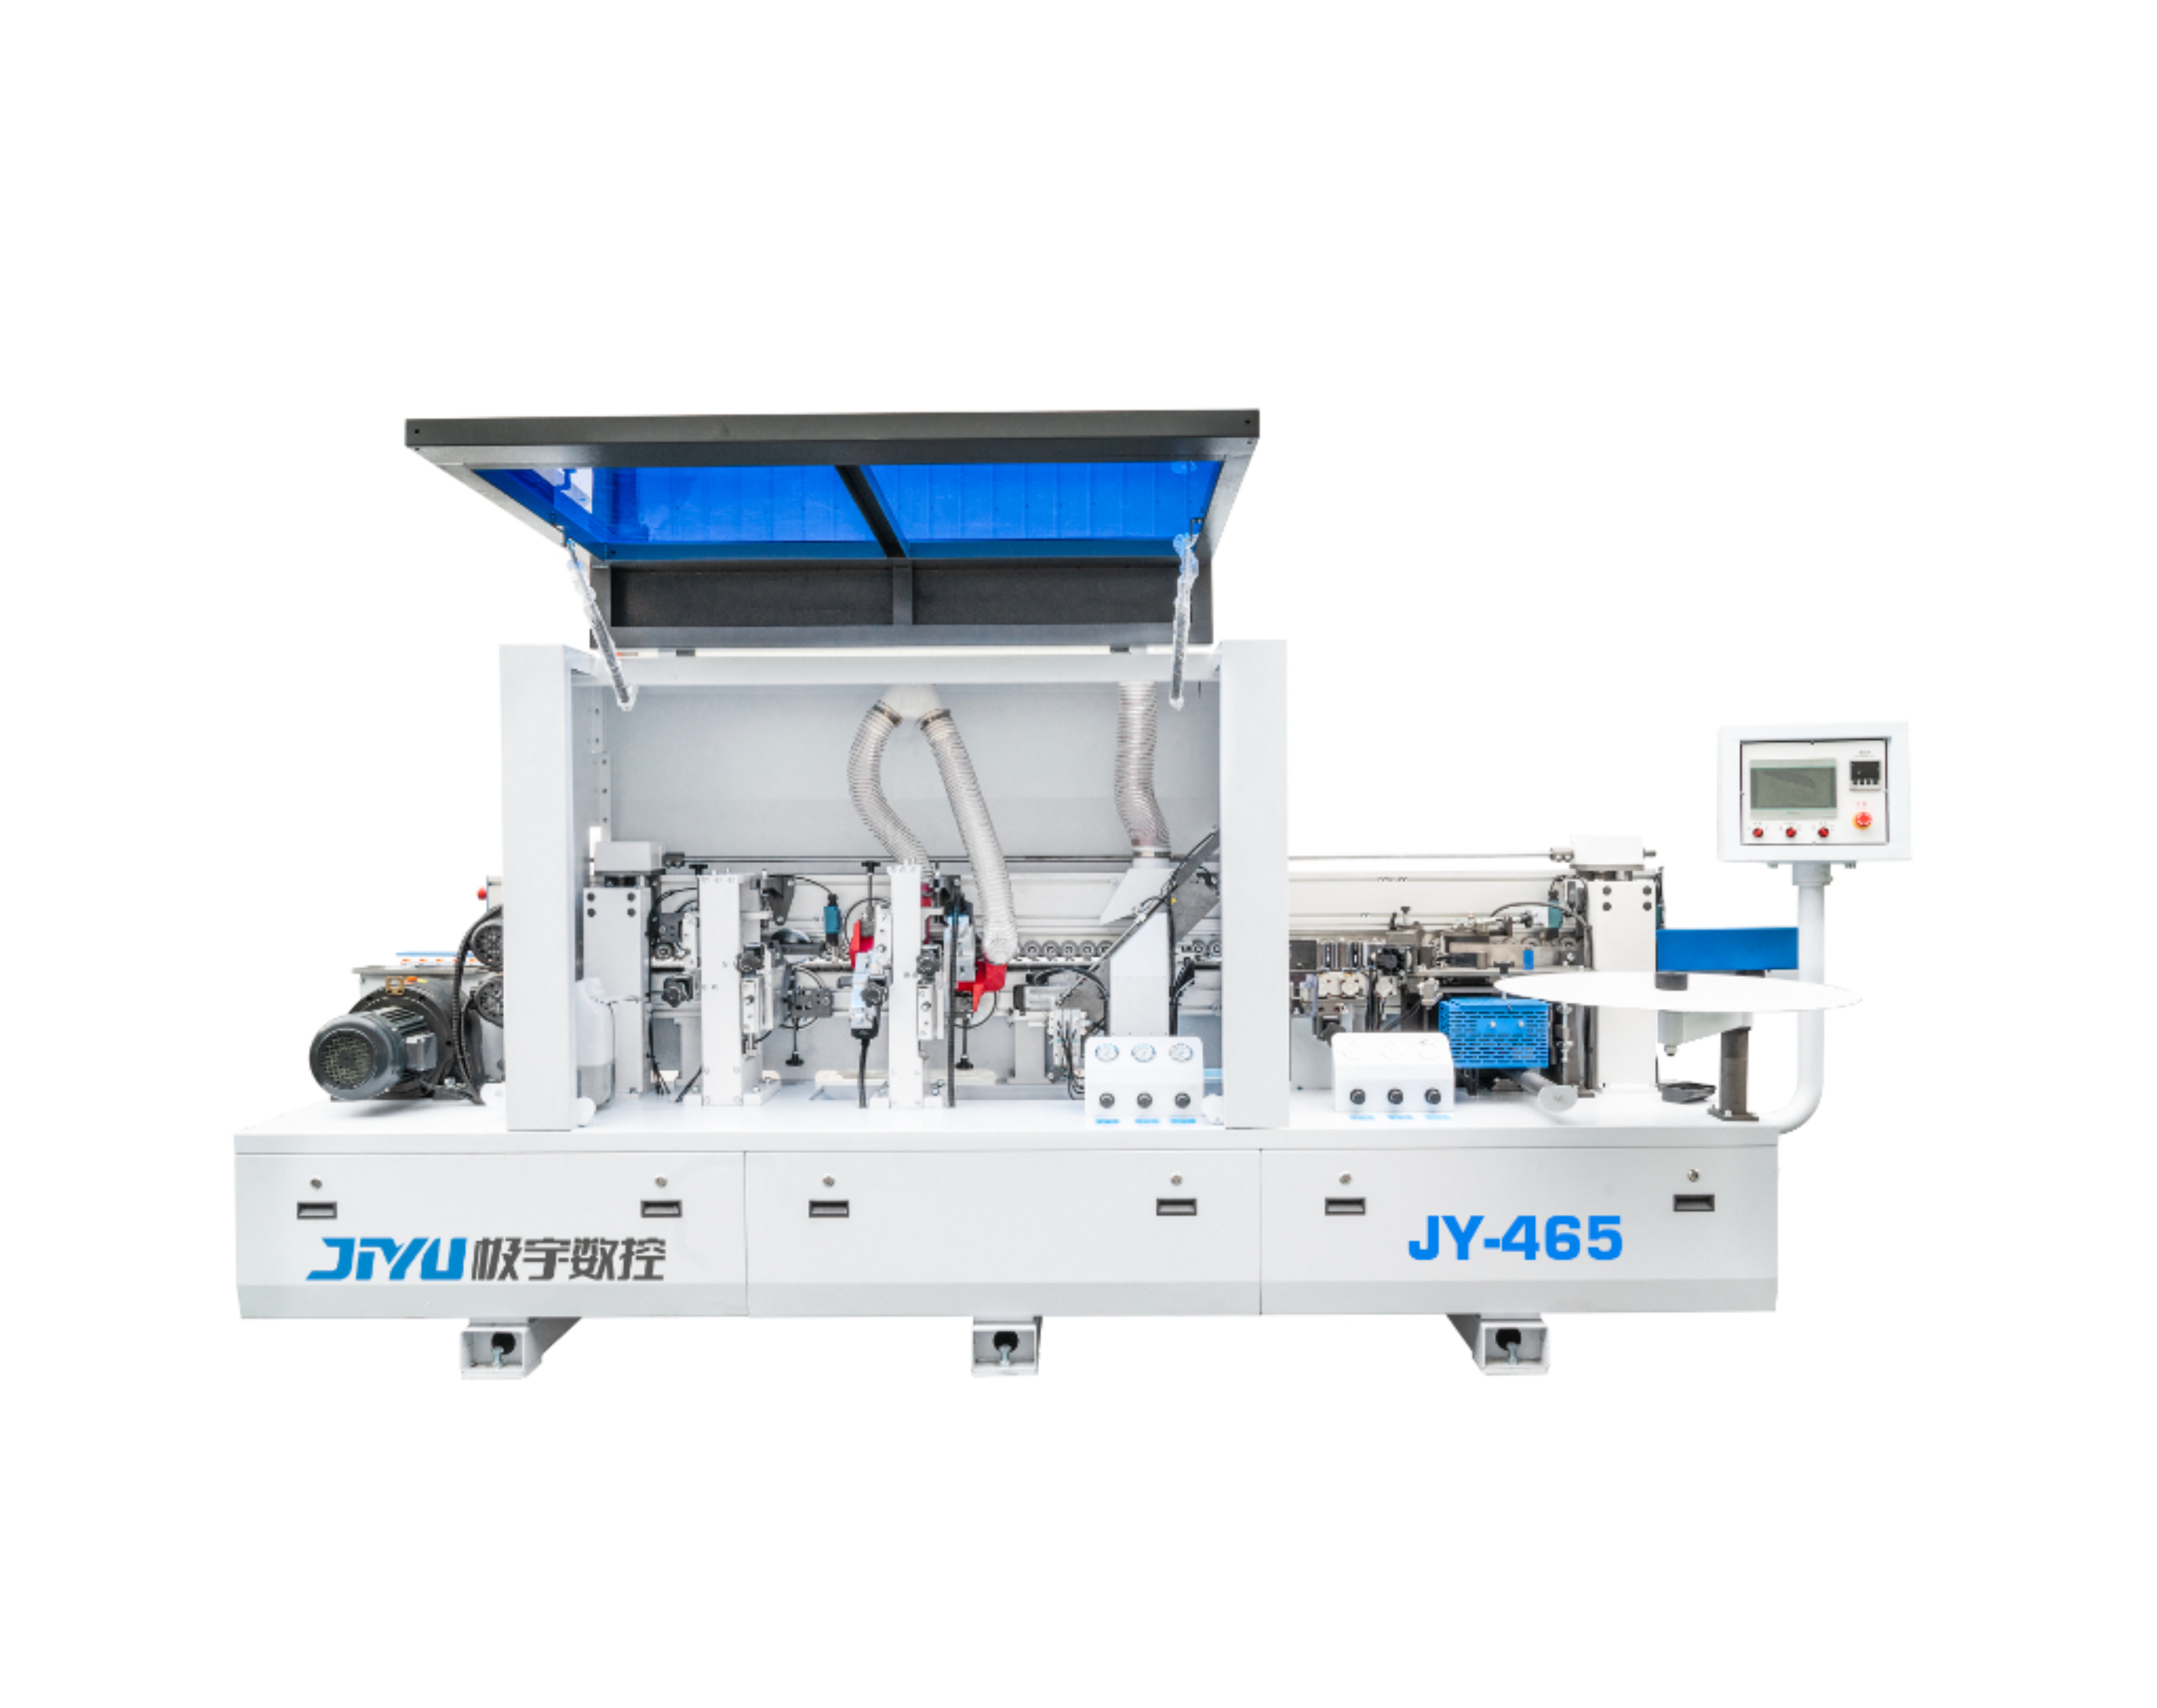 JY-465 Automatic Edge banding machines 23 m/min feed speed